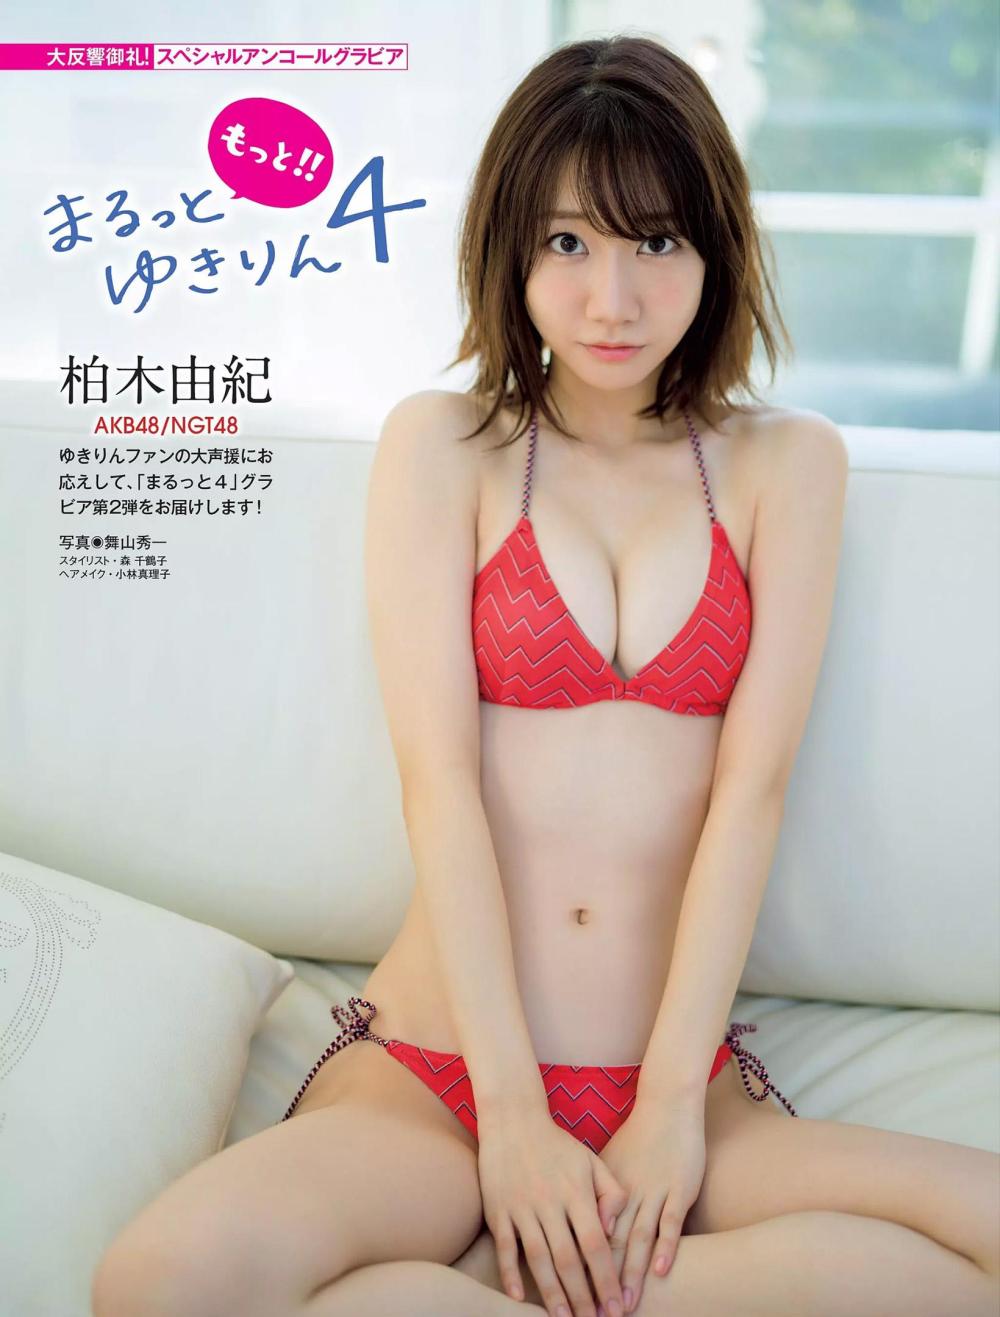 Yuki Kashiwagi Sexy and Hottest Photos , Latest Pics